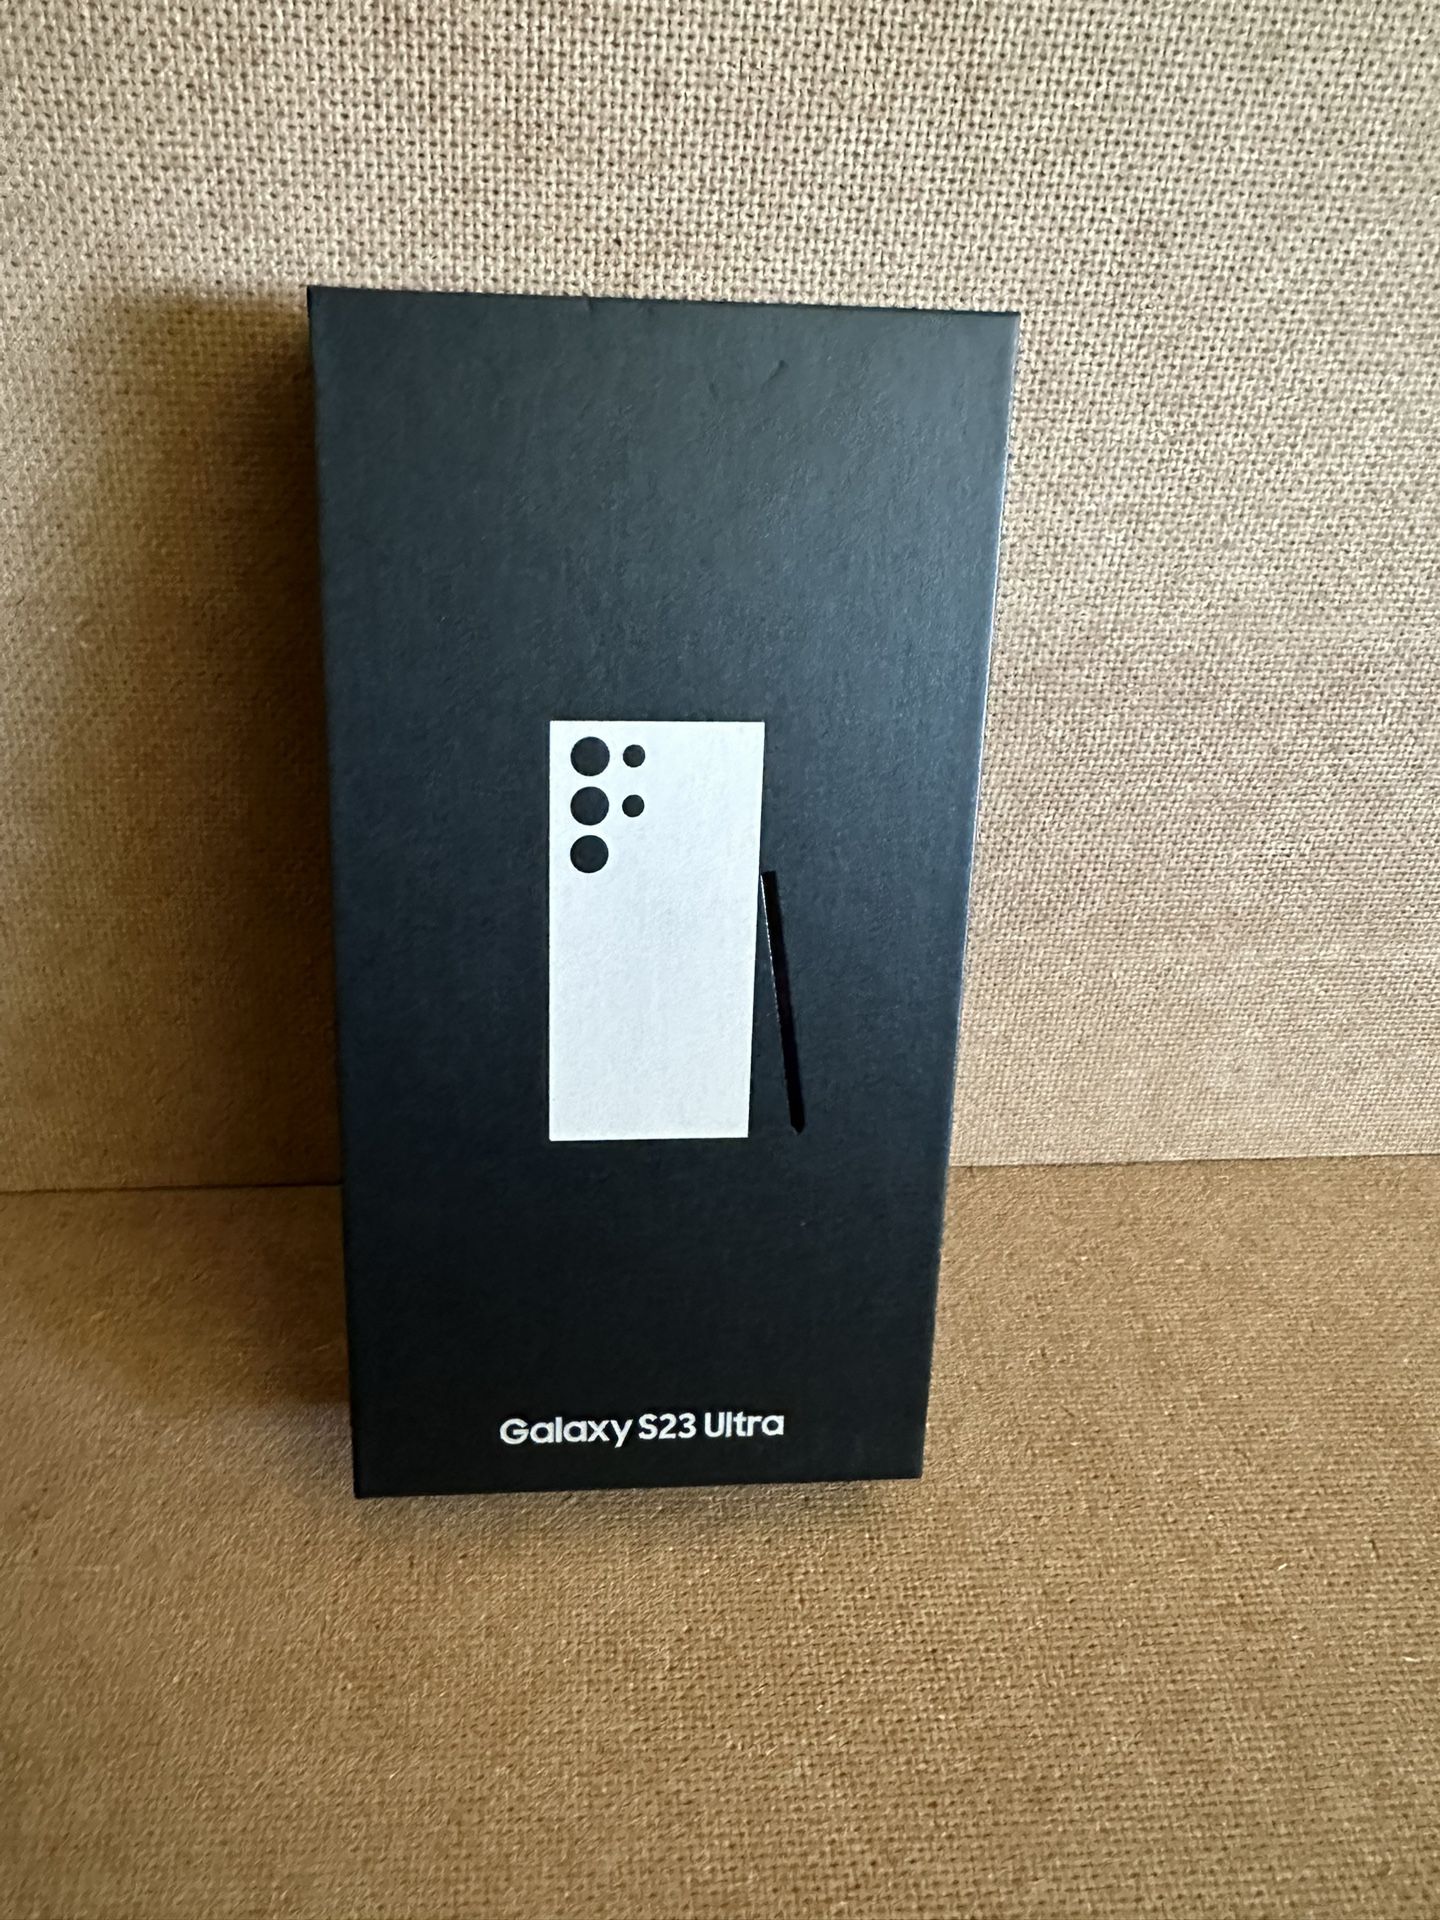 Samsung Galaxy S23 Ultra 512 GB for Sale in Renton, WA - OfferUp